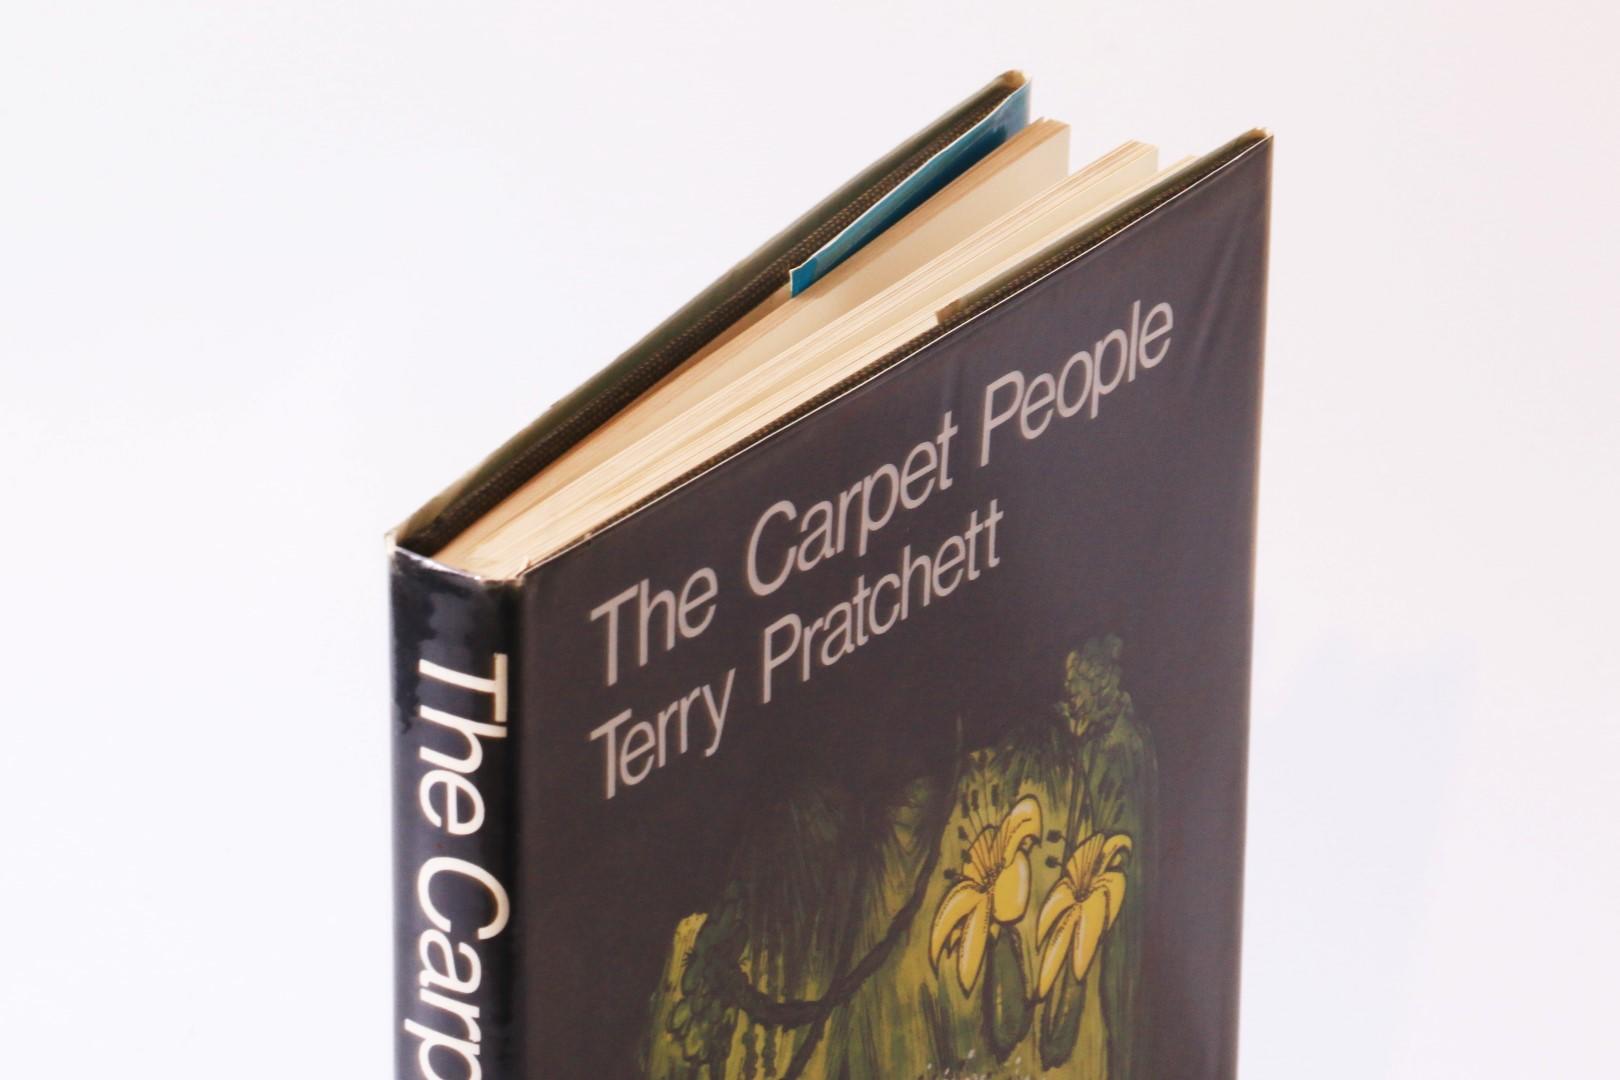 Terry Pratchett - The Carpet People - Colin Smythe, 1971, First Edition.